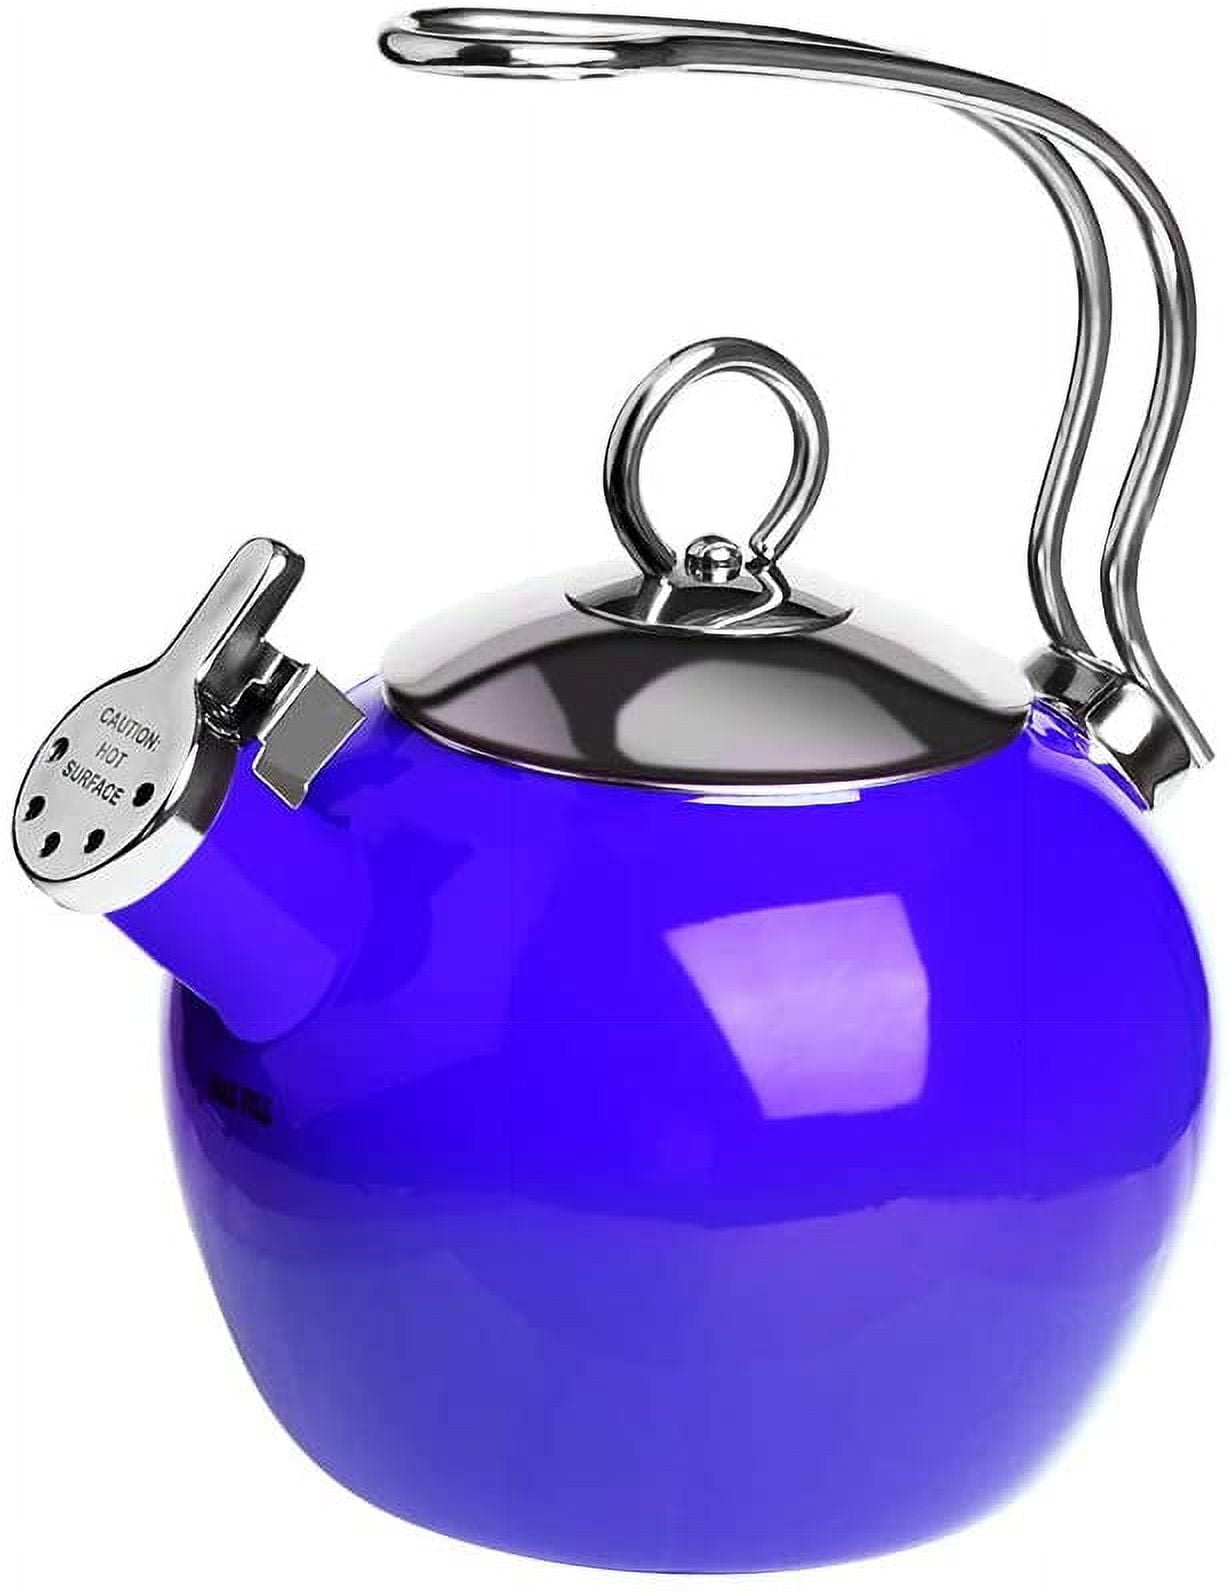 Whistling Tea Kettle for Stove Top Enamel on Steel Teakettle, Supreme  Housewares Pineapple Design Teapot Water Kettle Cute Kitchen Accessories  Teteras